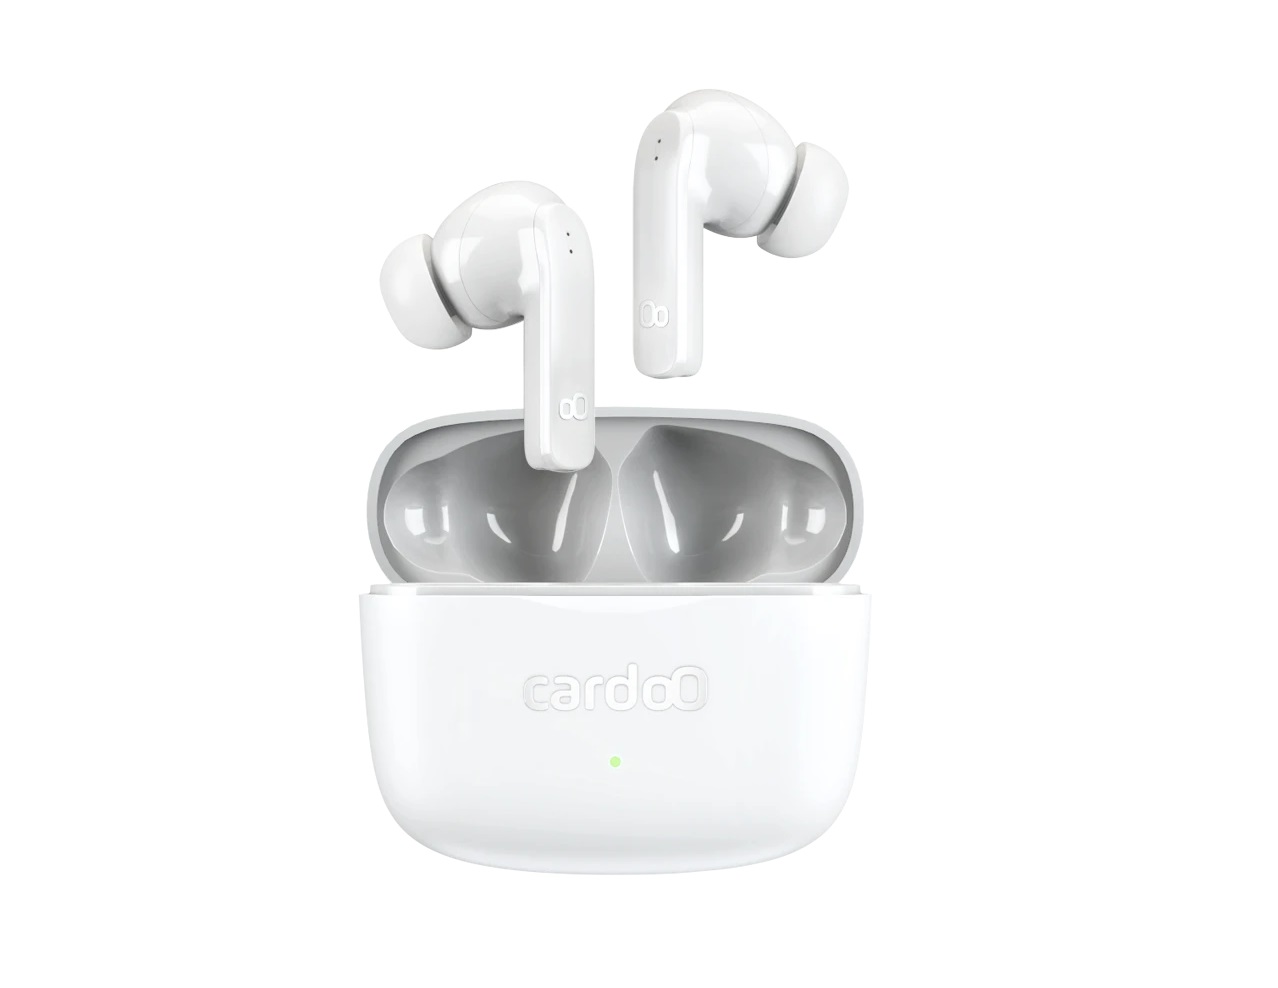 CardoO Wireless Earbuds, White - CEGBUD02